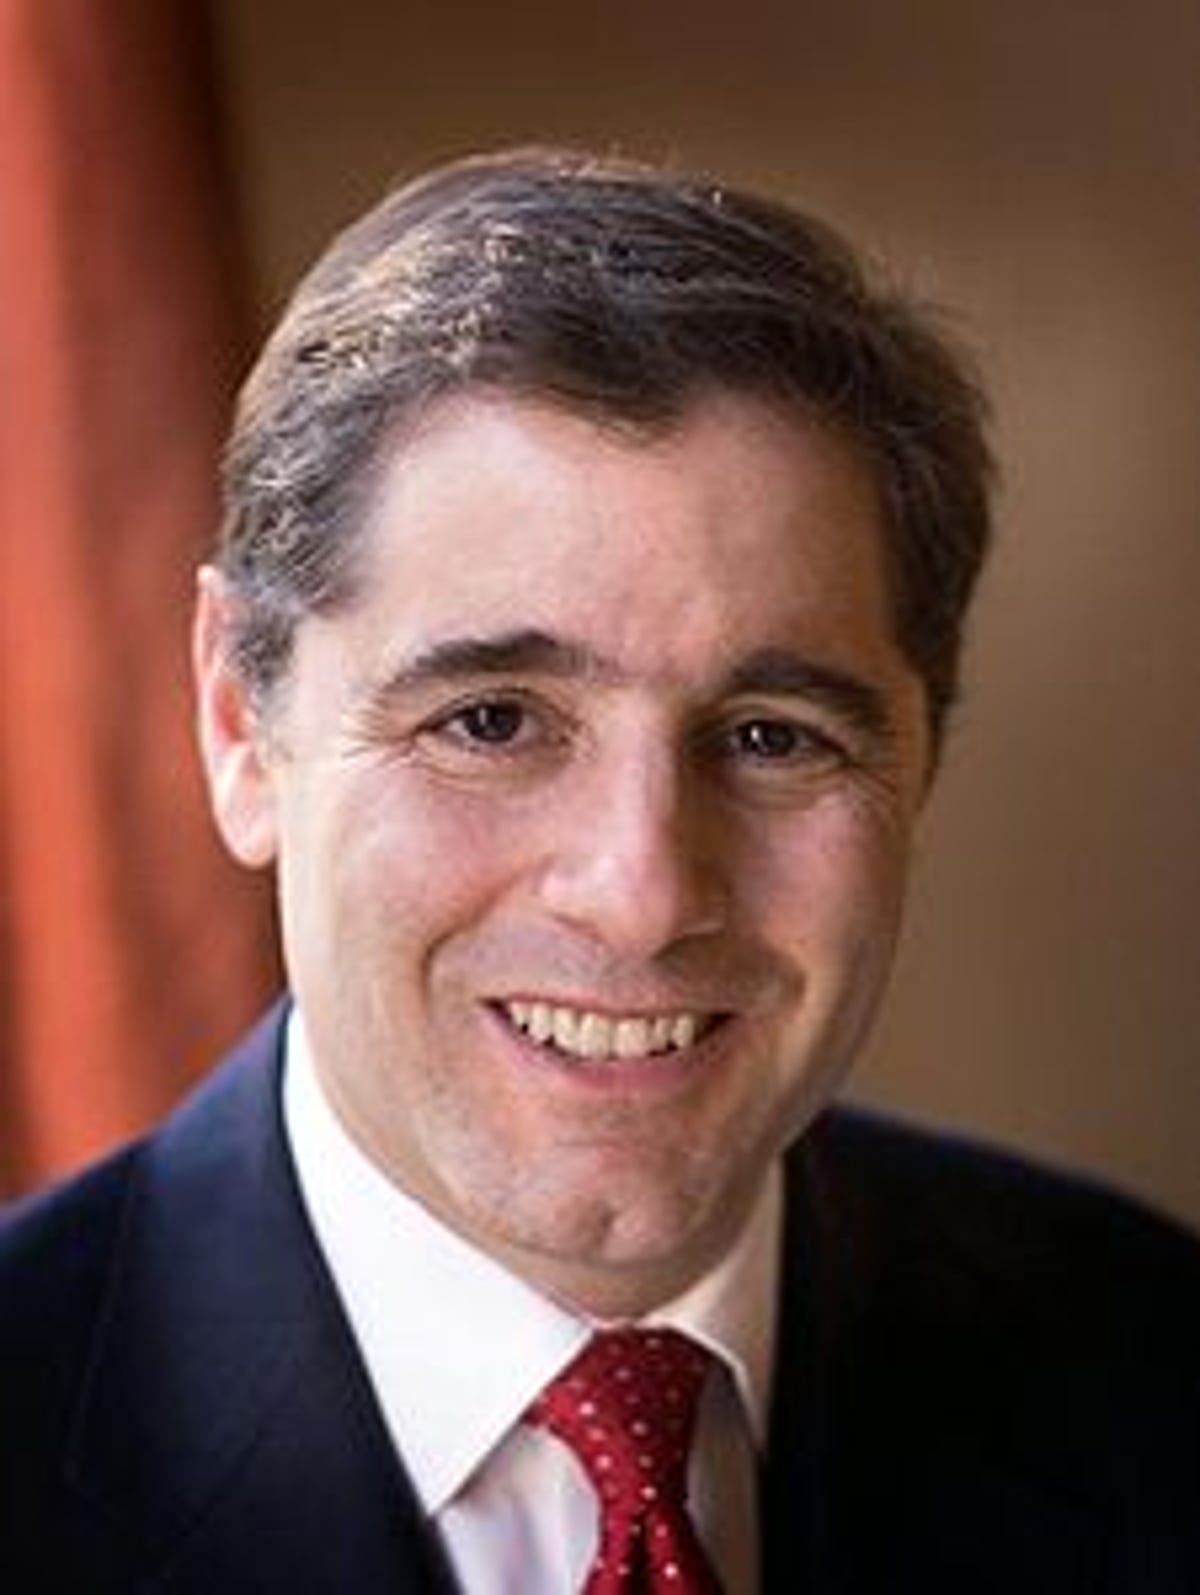 FCC Chairman Julius Genachowski